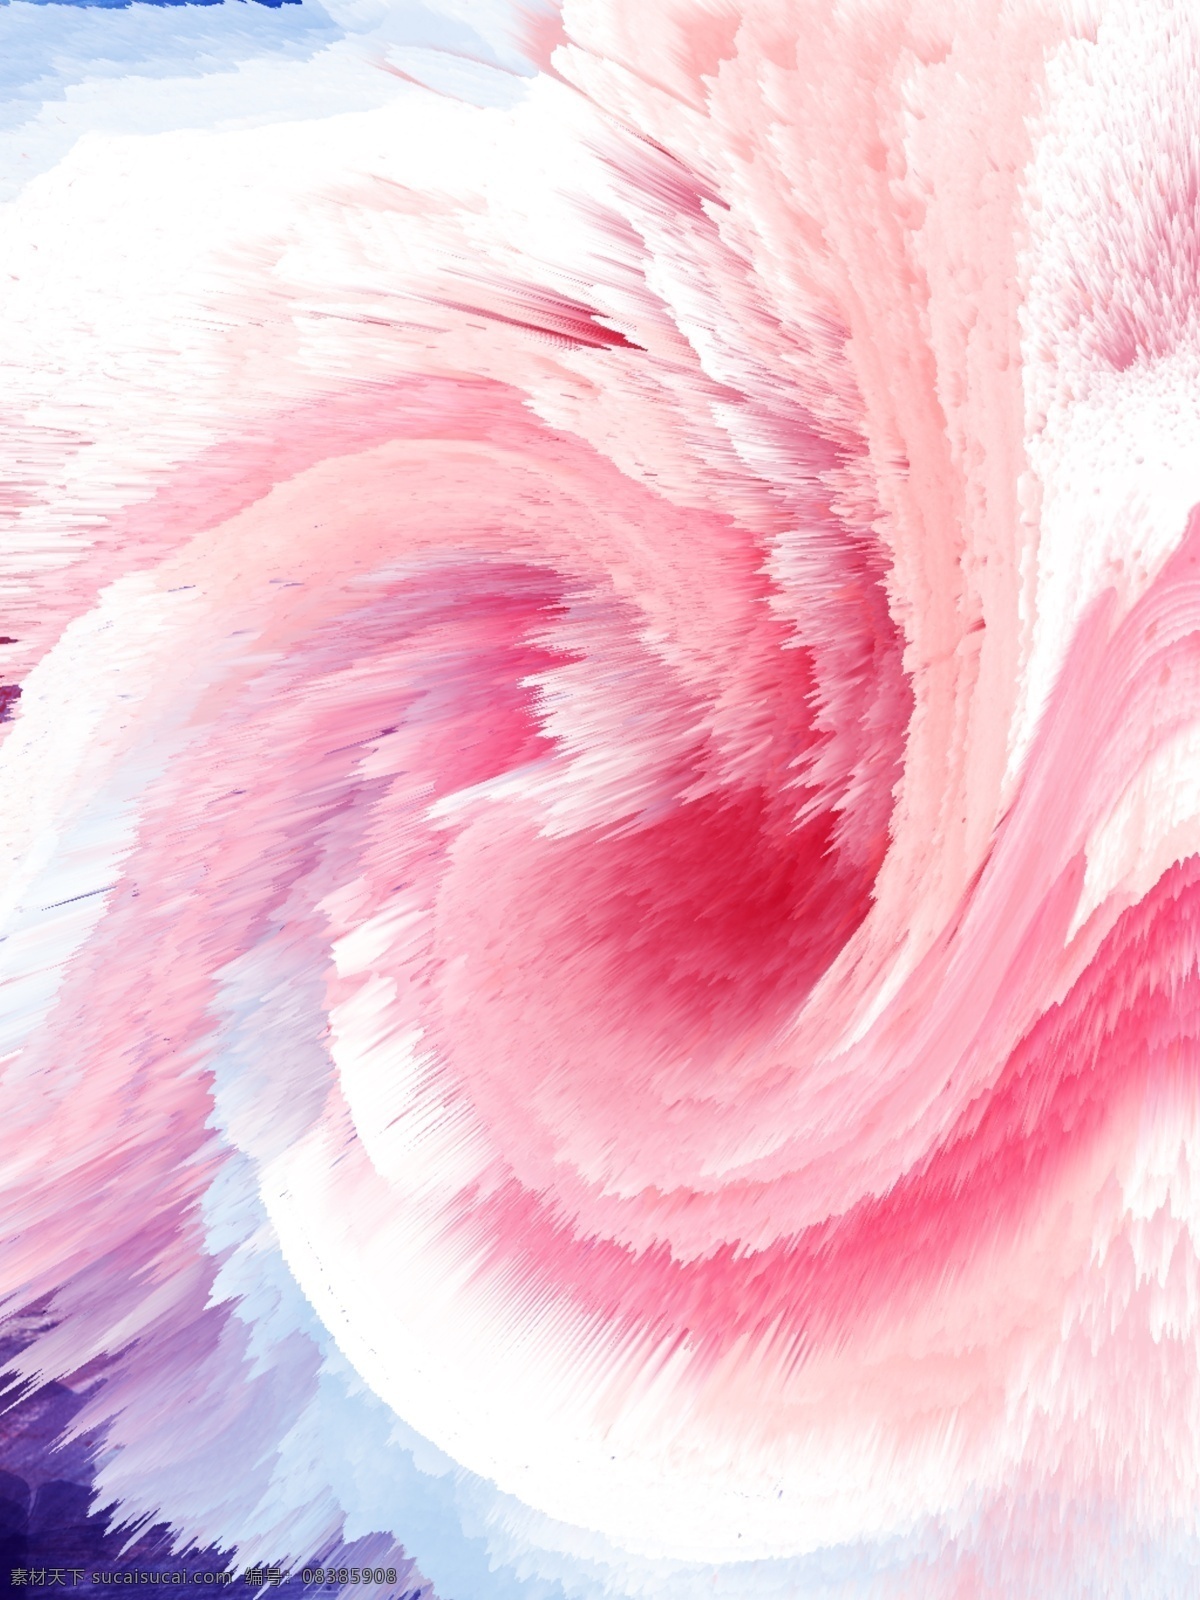 3d 漩涡 背景 粉色 渐变 抽象 抽象背景 可爱 小清新 时尚 3d漩涡 广告背景 流行